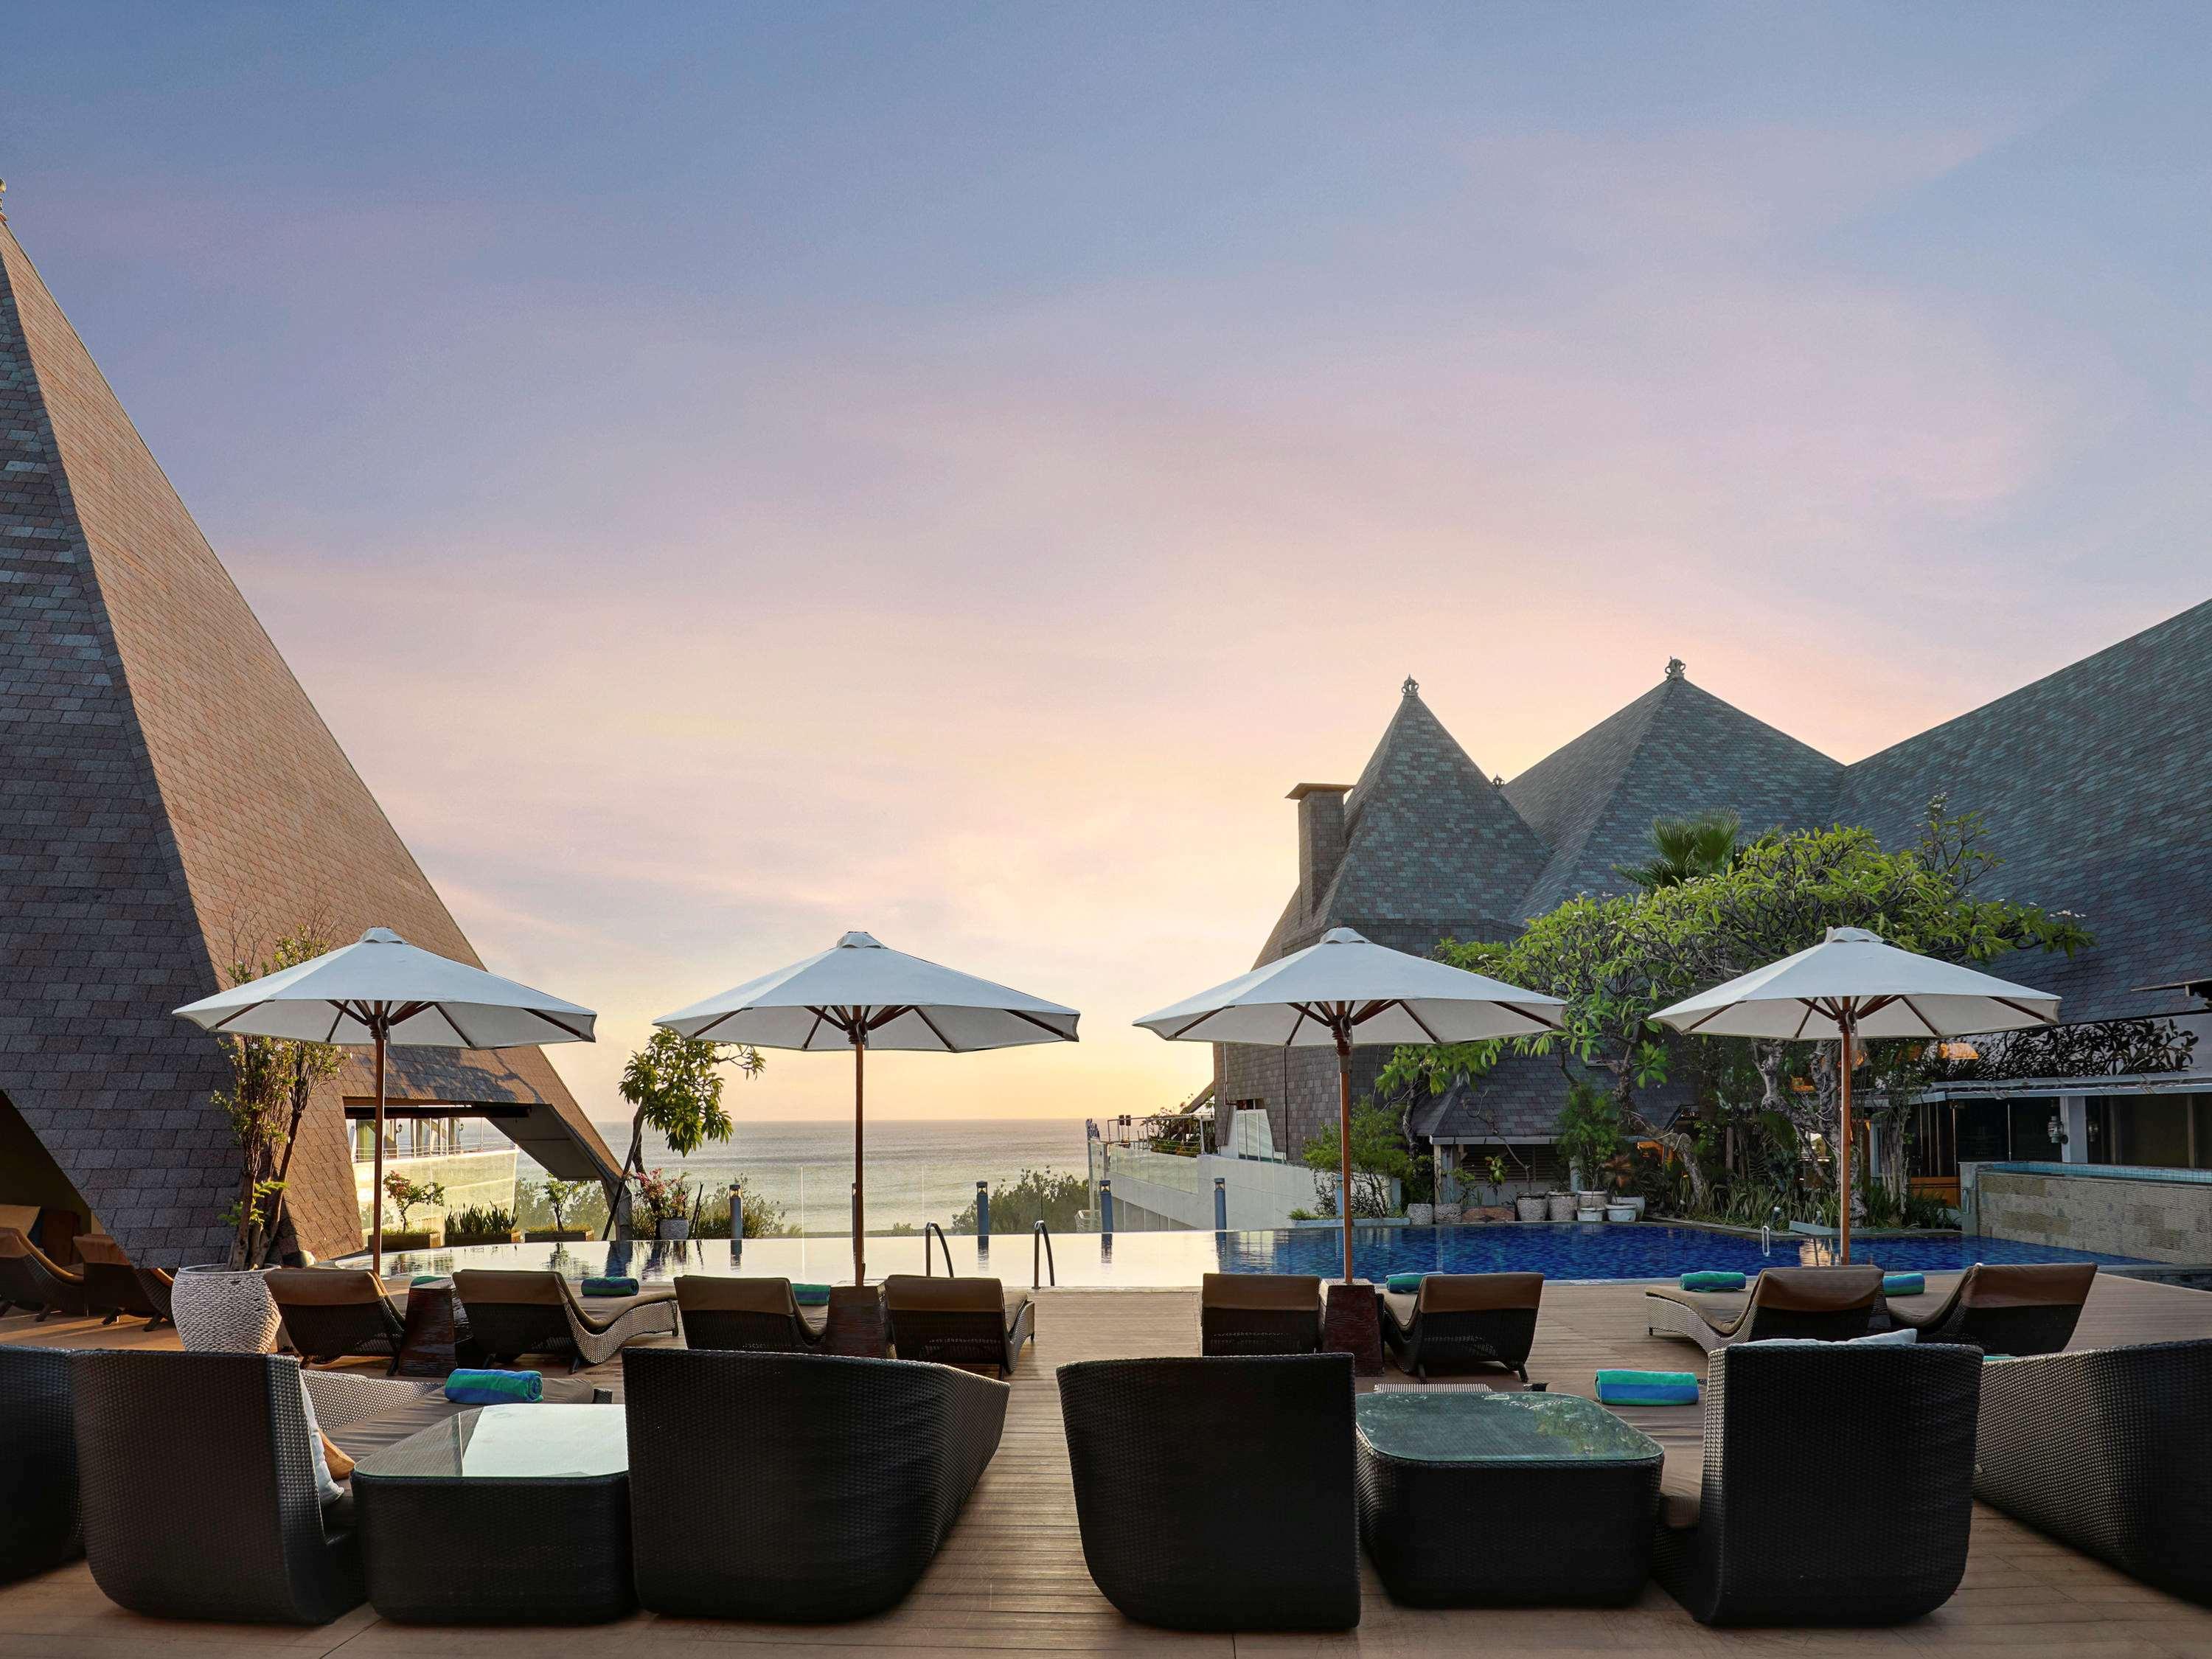 The Kuta Beach Heritage Hotel Bali - Managed By Accor